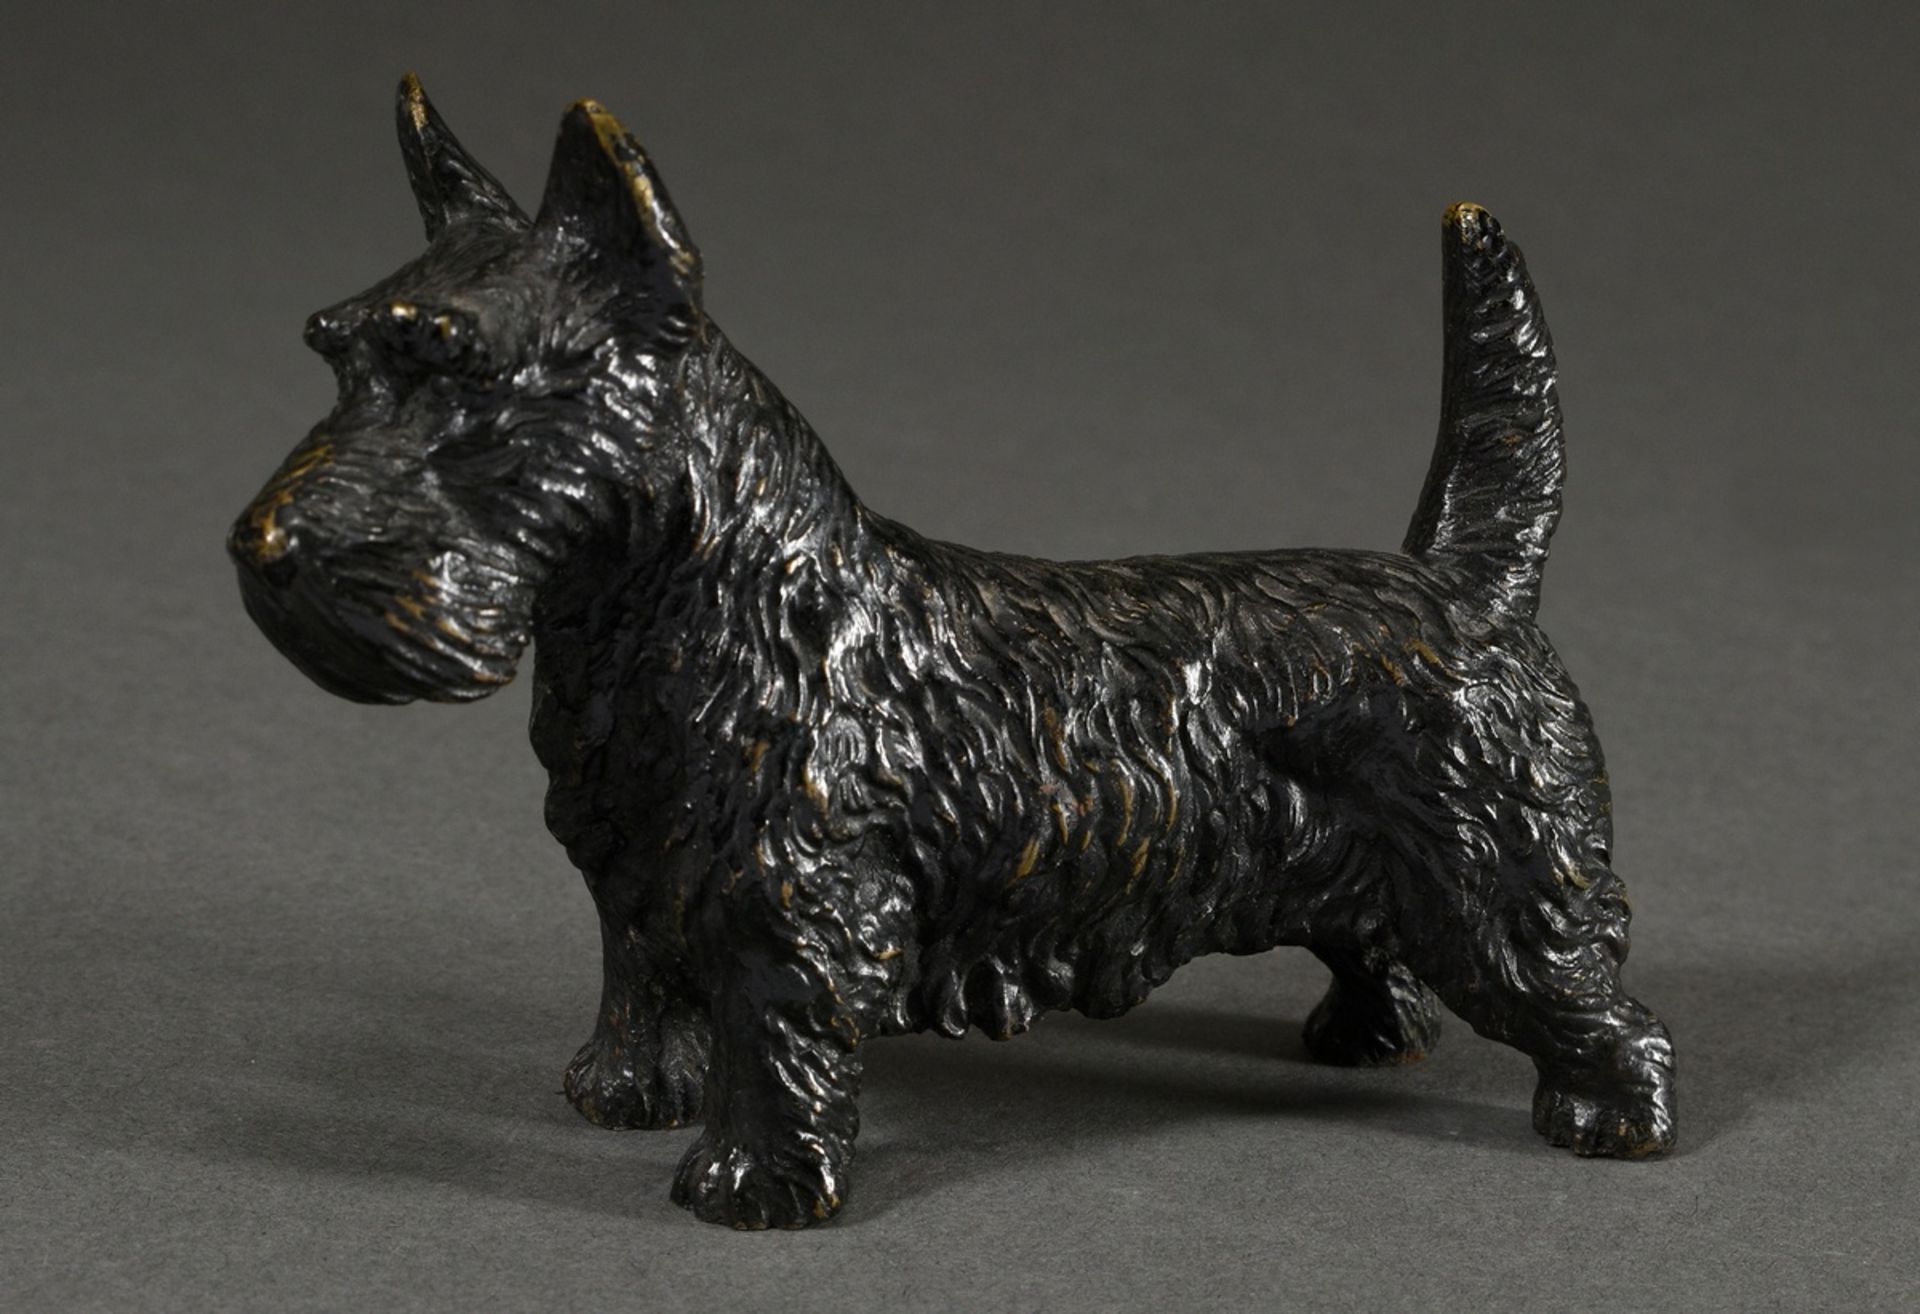 Kleine Bronze "Scotch Terrier" in feiner Ausführung, Anfang 20.Jh., 8x11x3,3cm